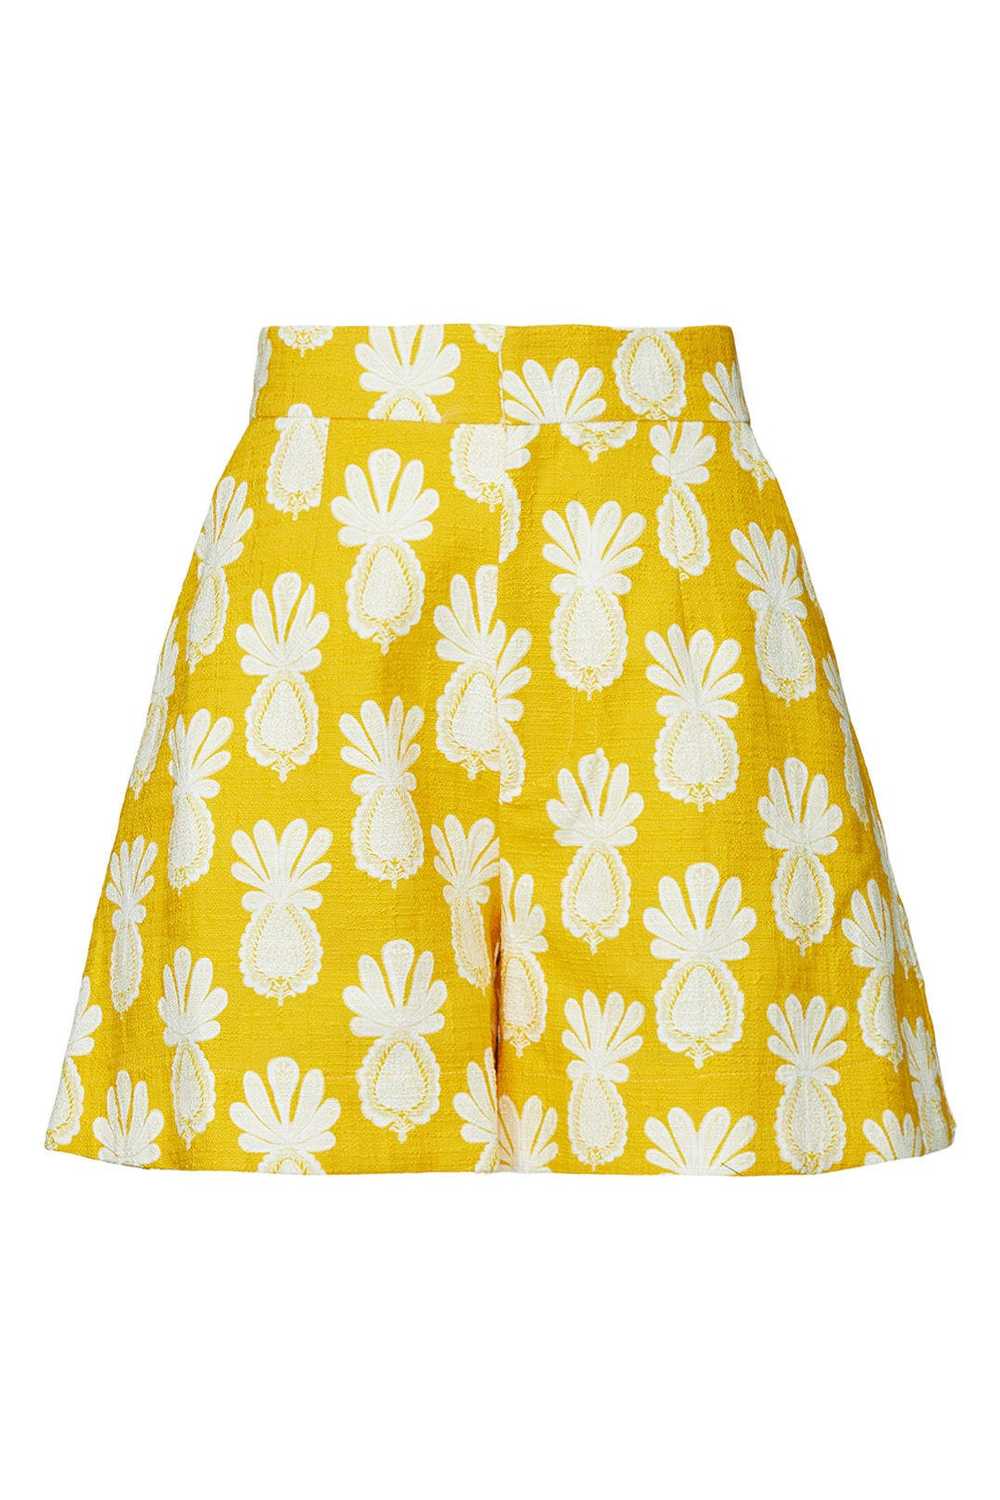 La DoubleJ Pineapple Printed Shorts - image 5